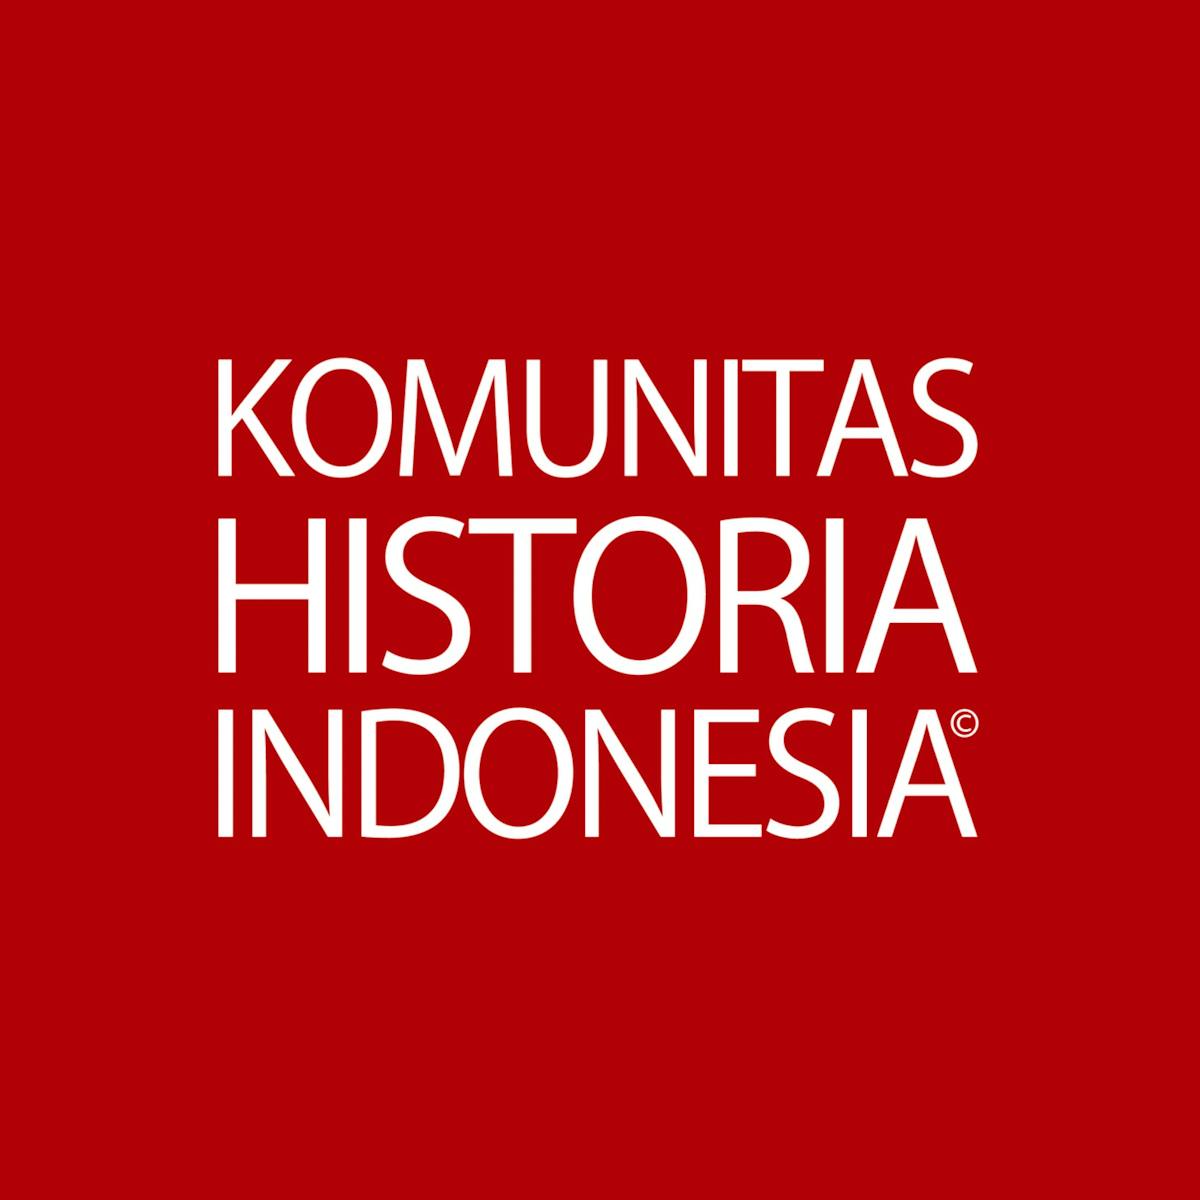 Komunitas Historia Indonesia